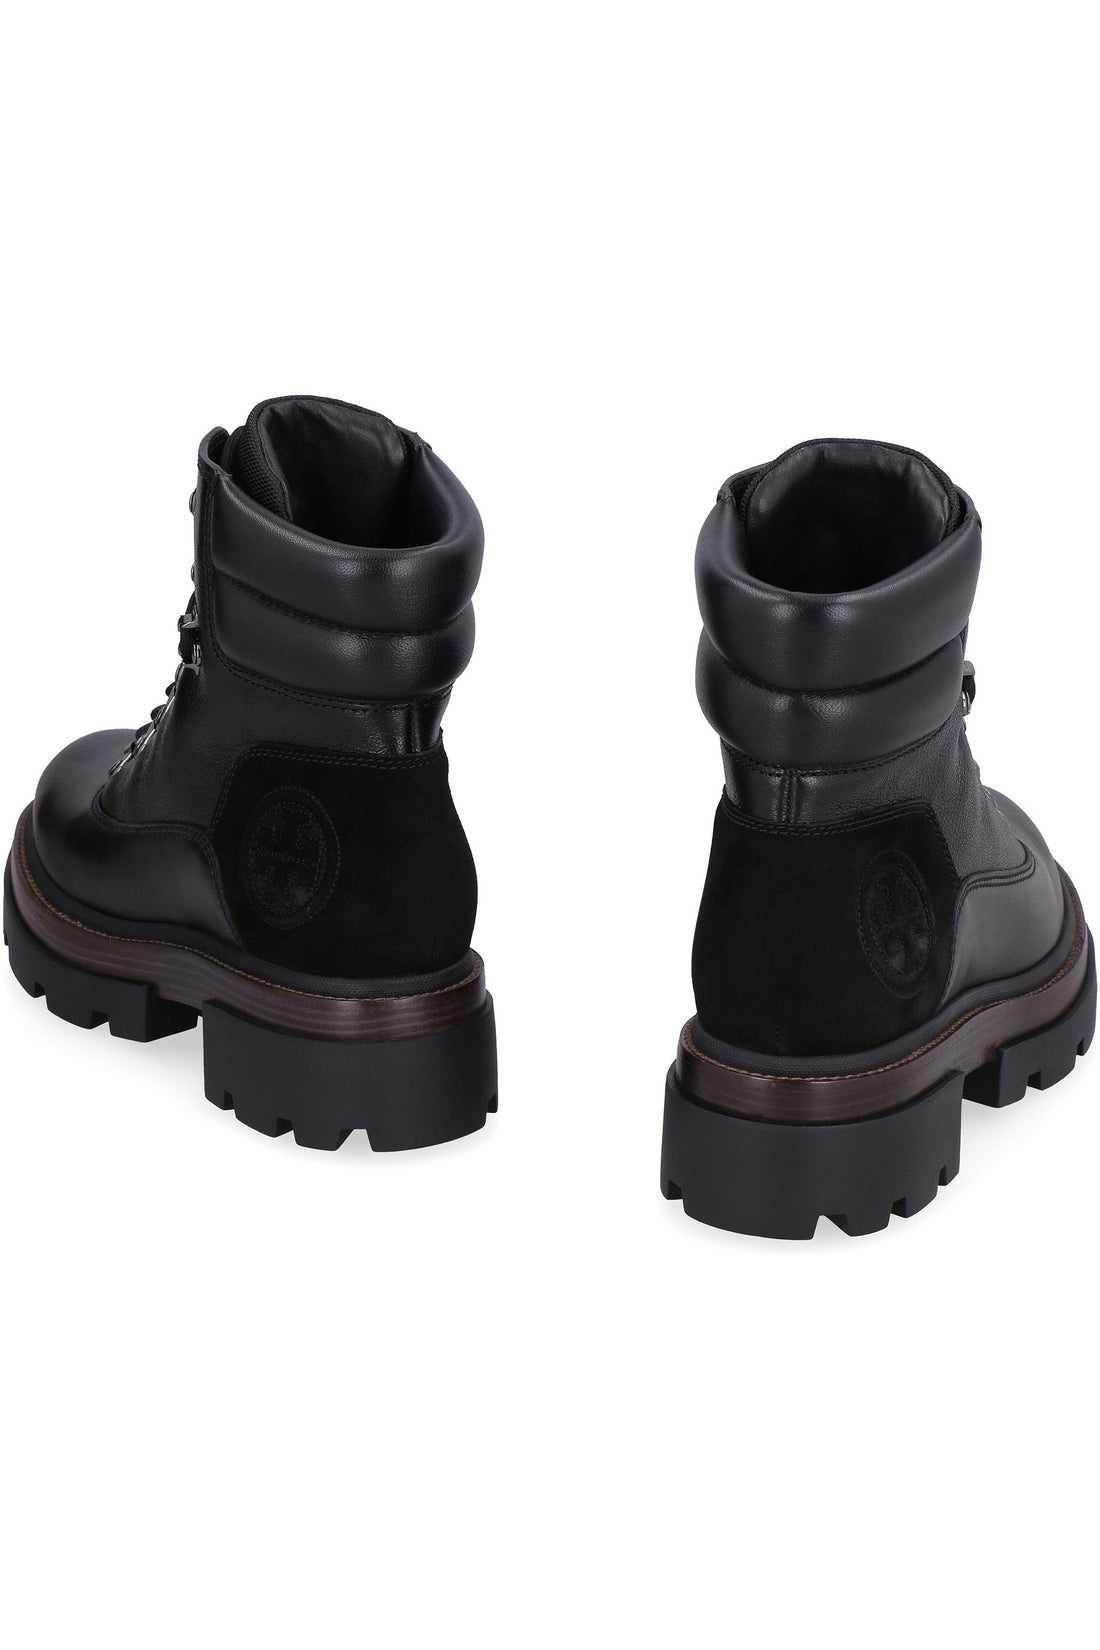 Tory Burch-OUTLET-SALE-Miller leather combat boots-ARCHIVIST